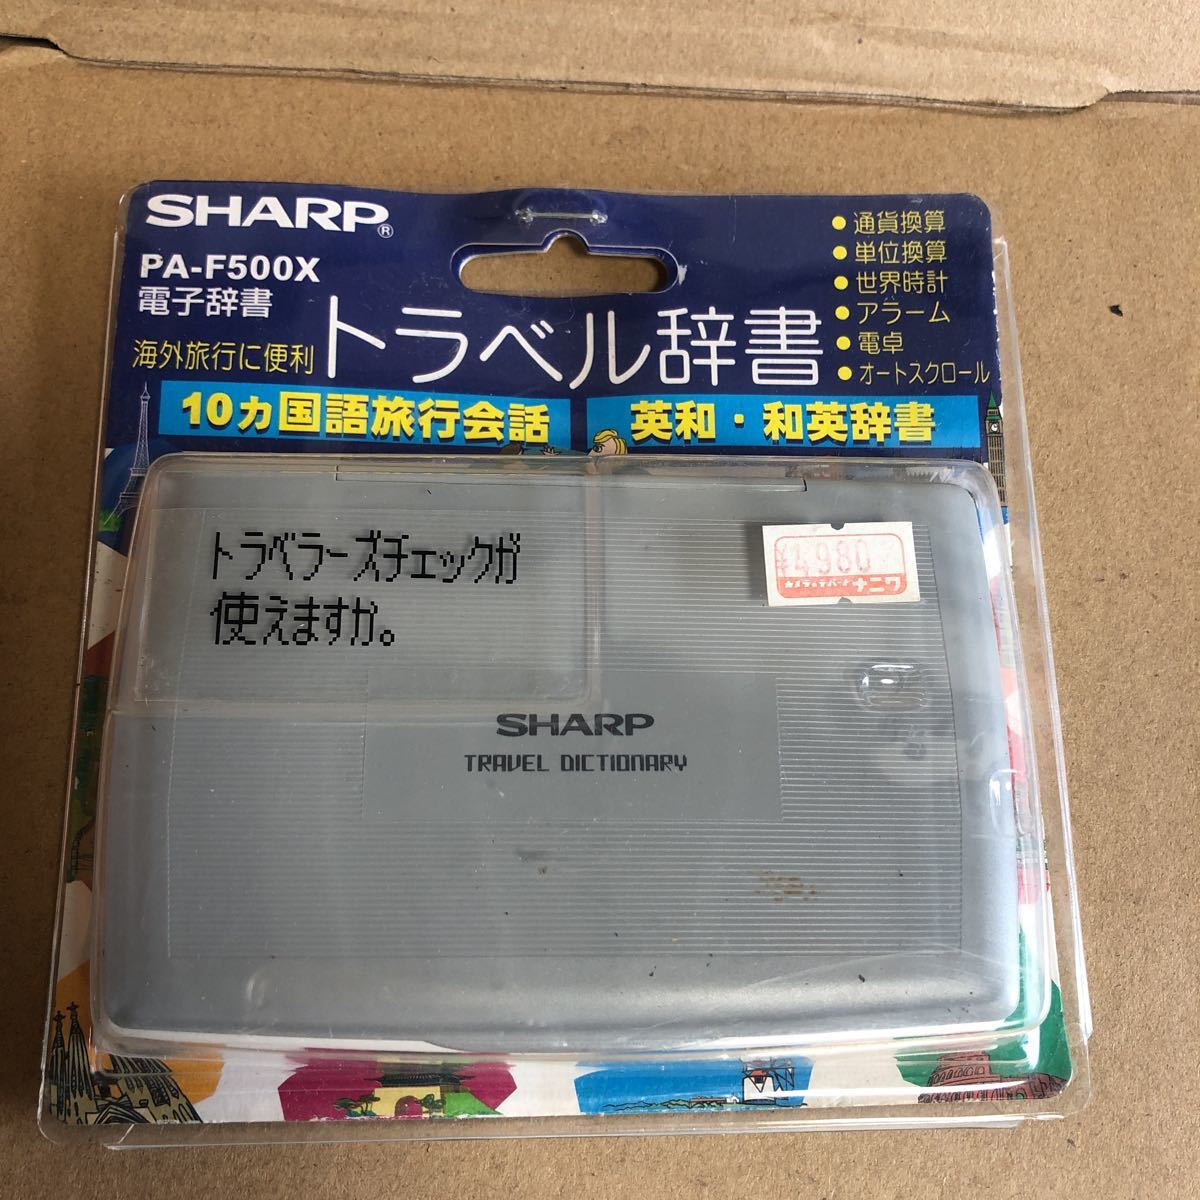 (19-302)SHARP travel dictionary computerized dictionary unused goods 